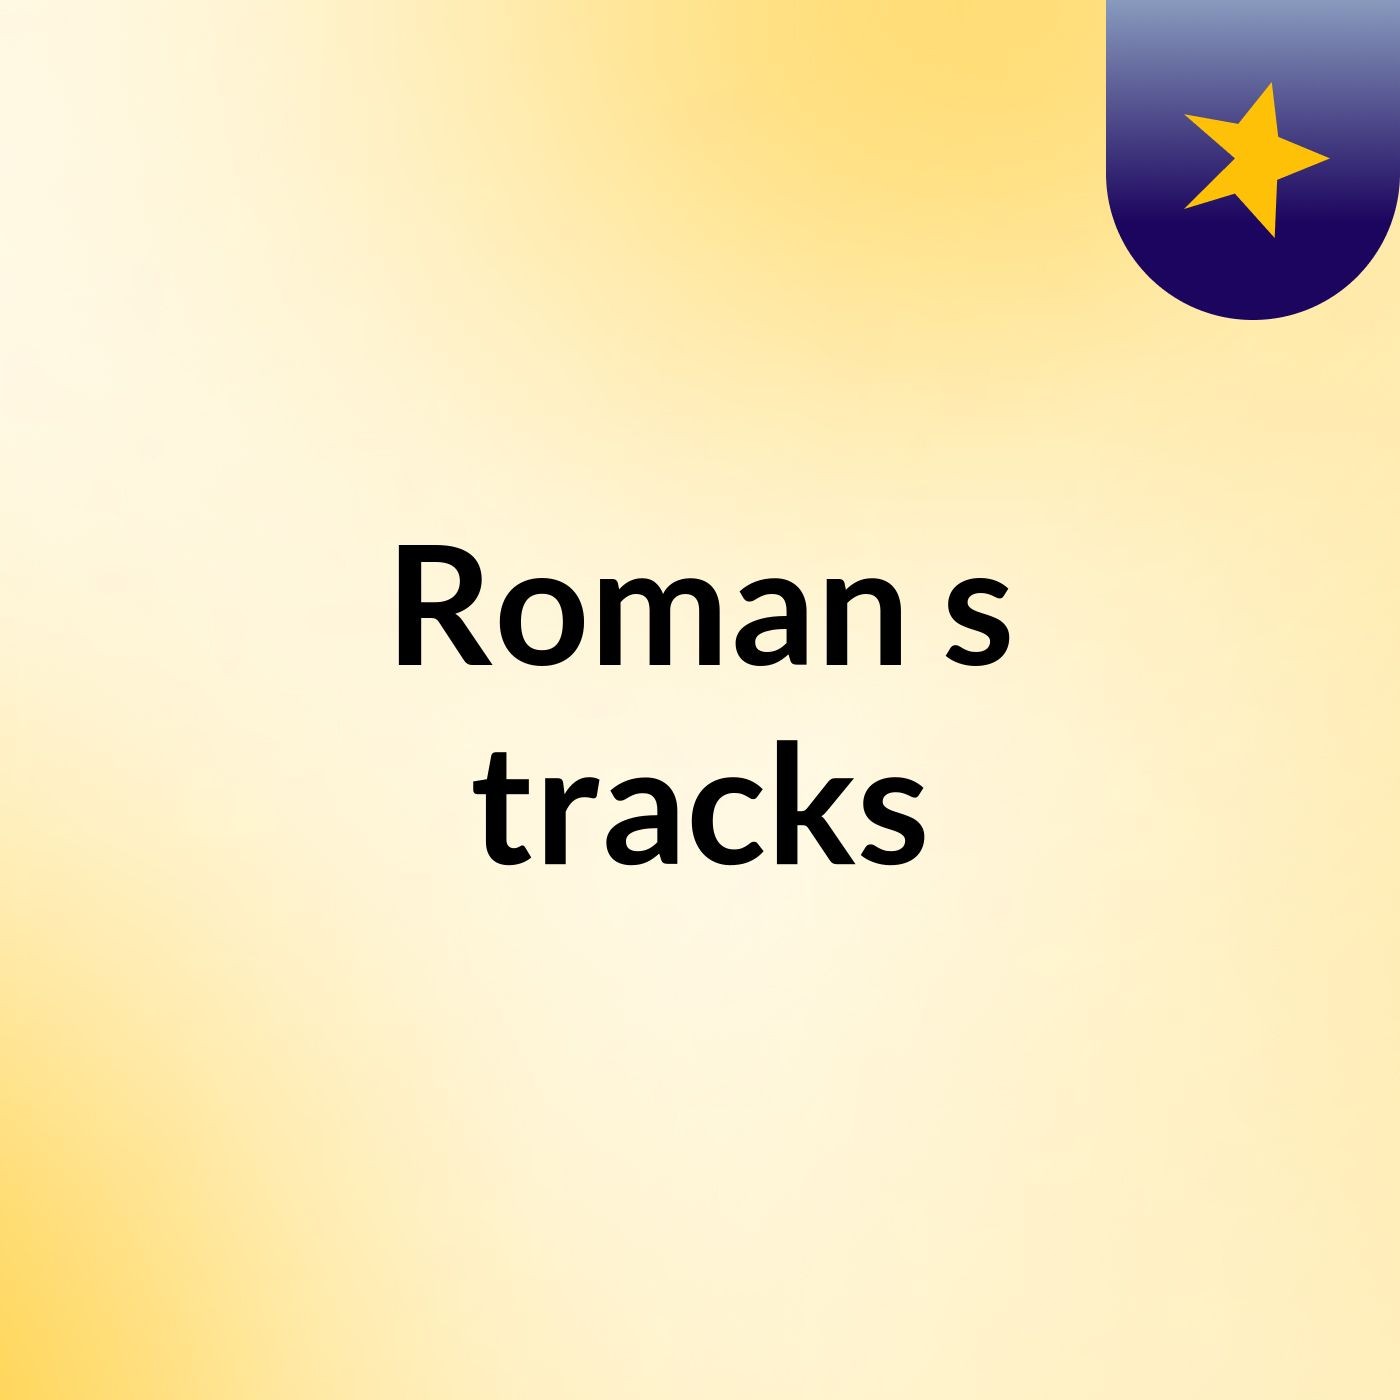 Roman's tracks